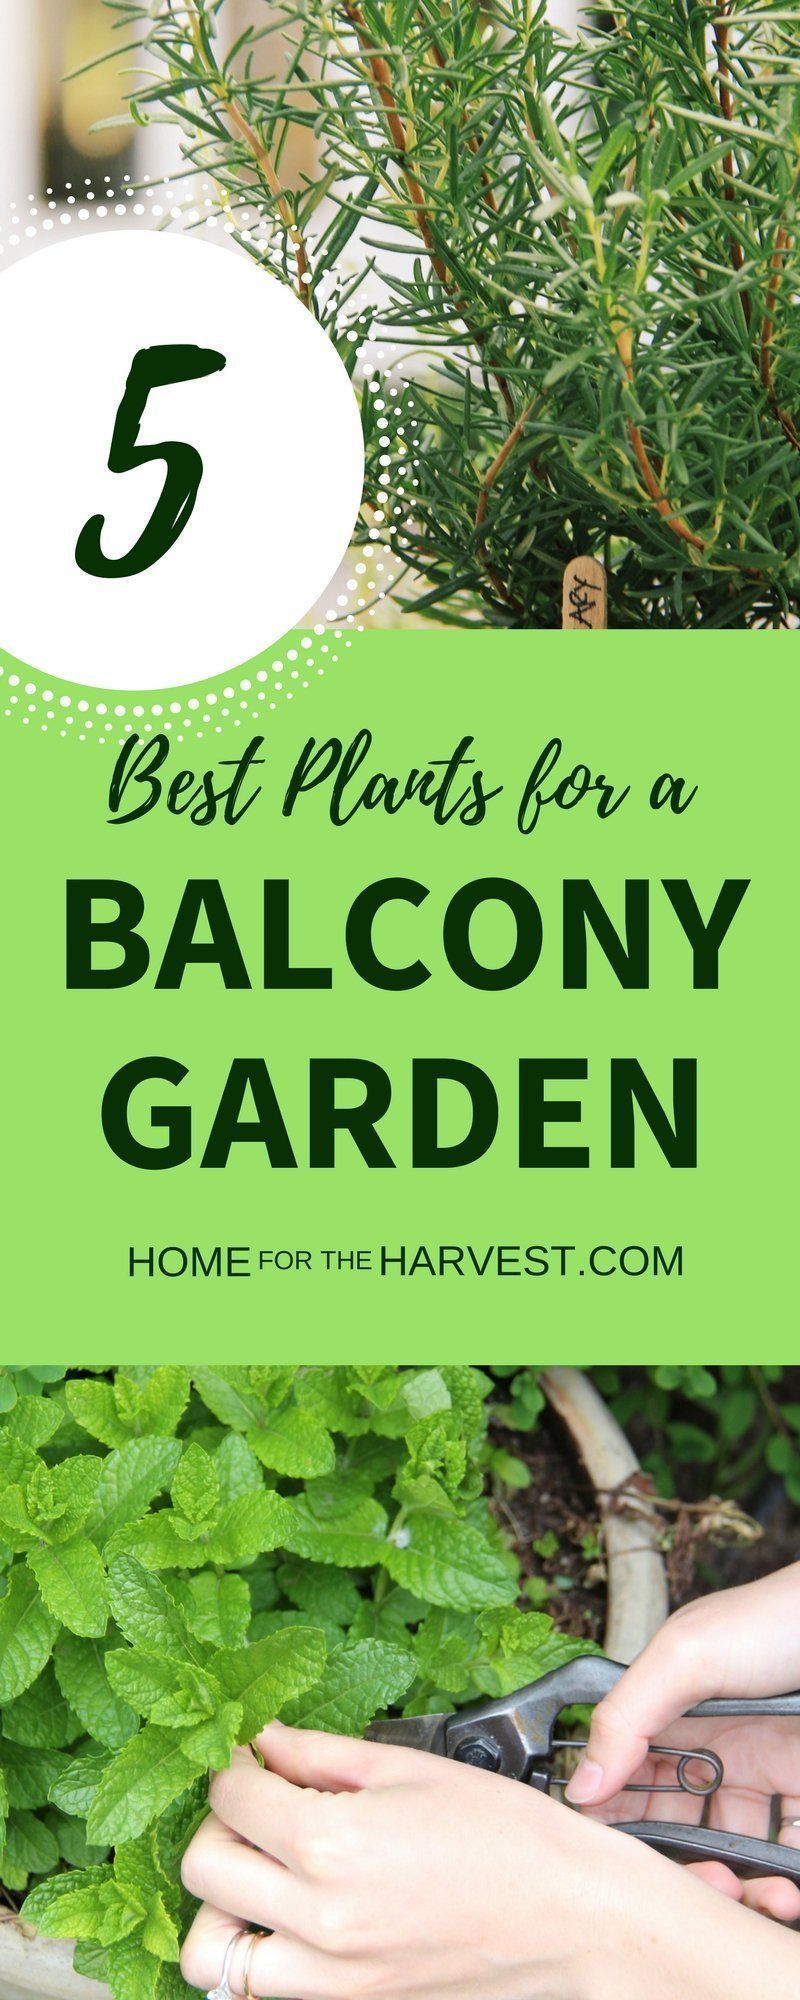 The Top 5 Plants for a Balcony Vegetable Garden -   19 plants Balcony articles ideas